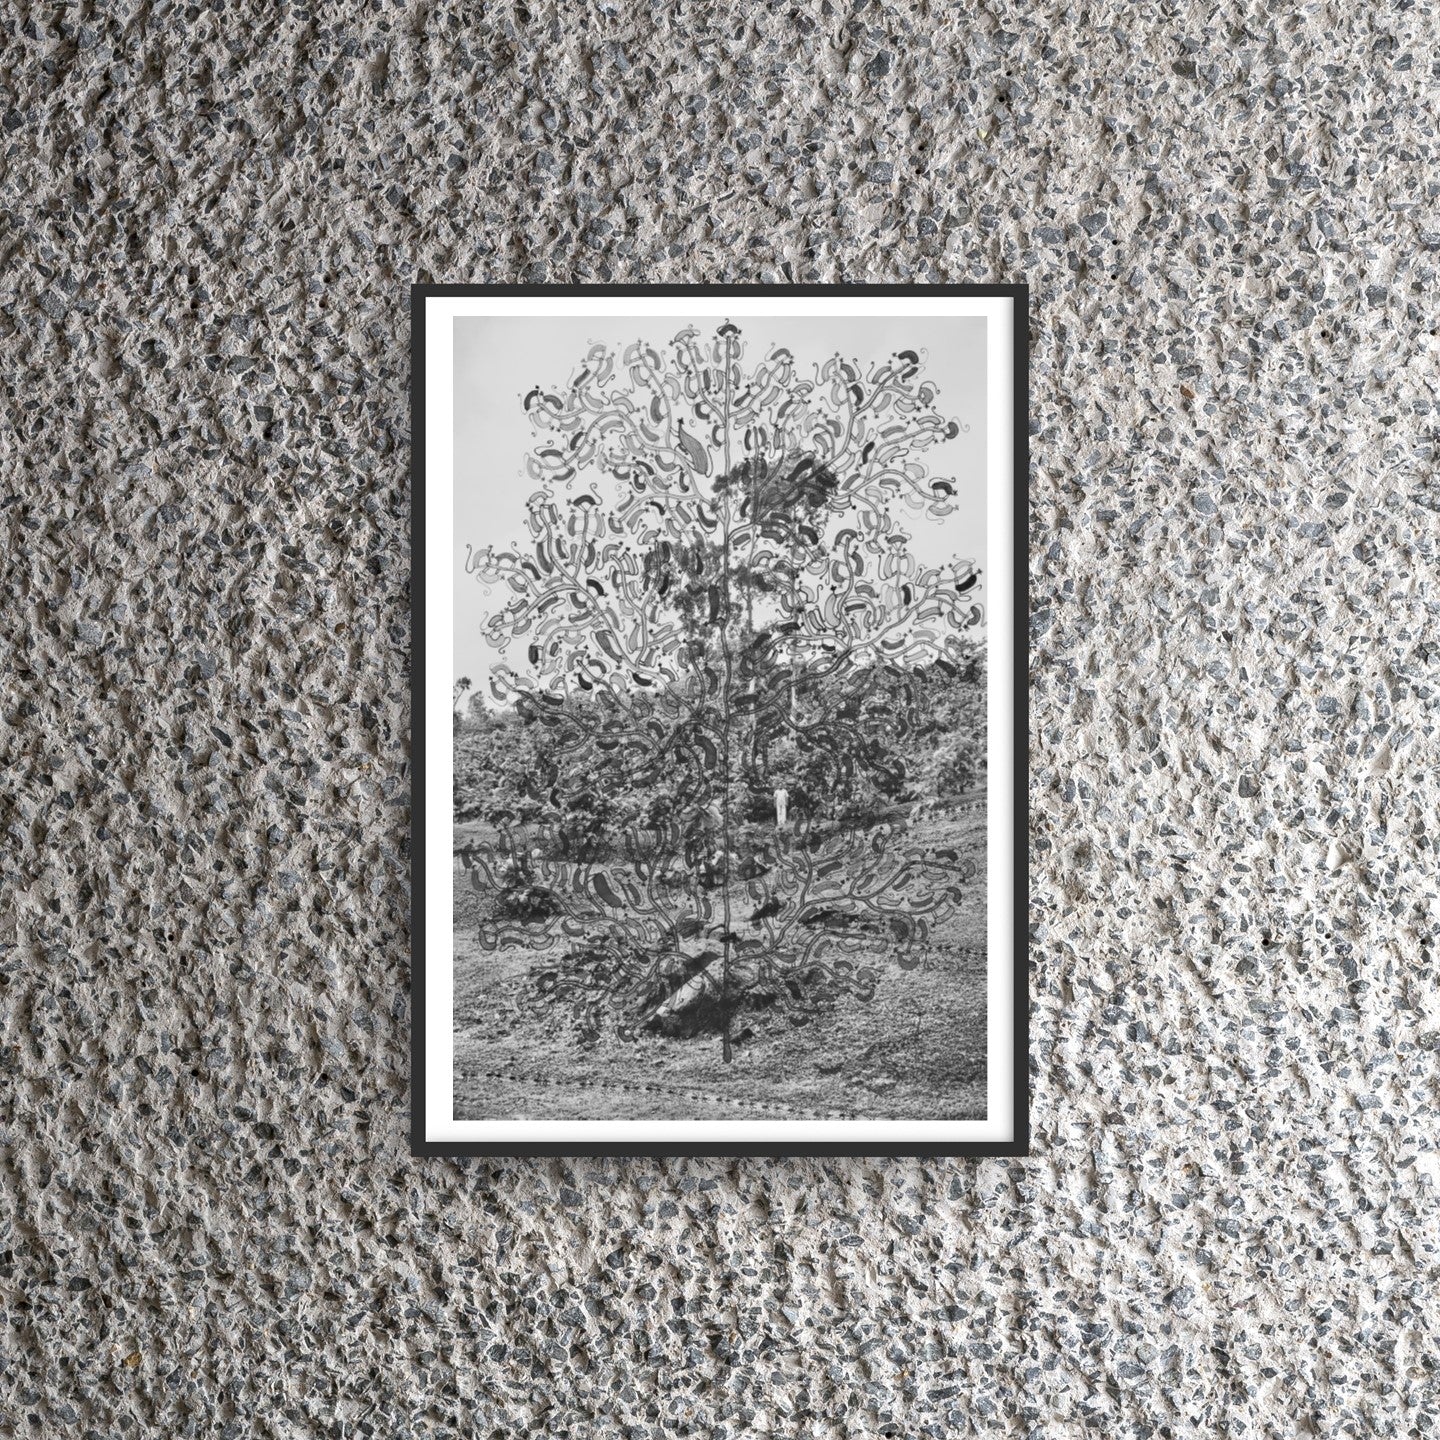 Gauri Gill A3 Print, Tree of Monkey Ancestors, 2015